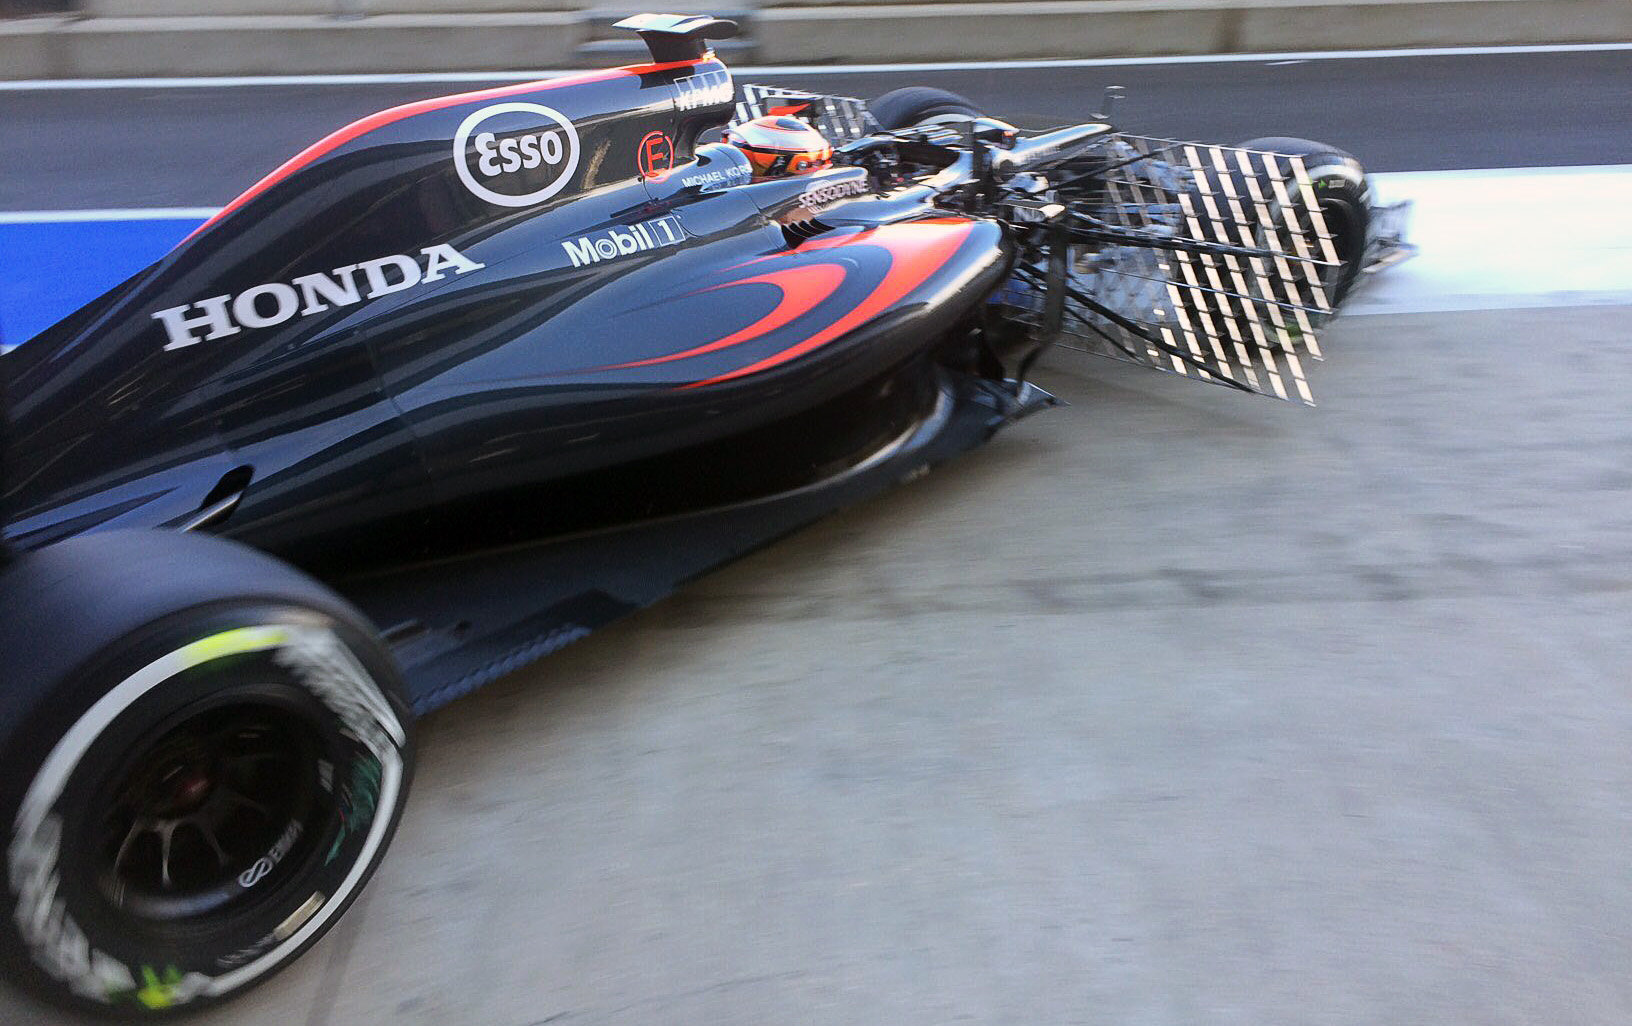 Stoffel Vandoorne s McLarenem MP4-31 během druhého dne testů v Silverstone